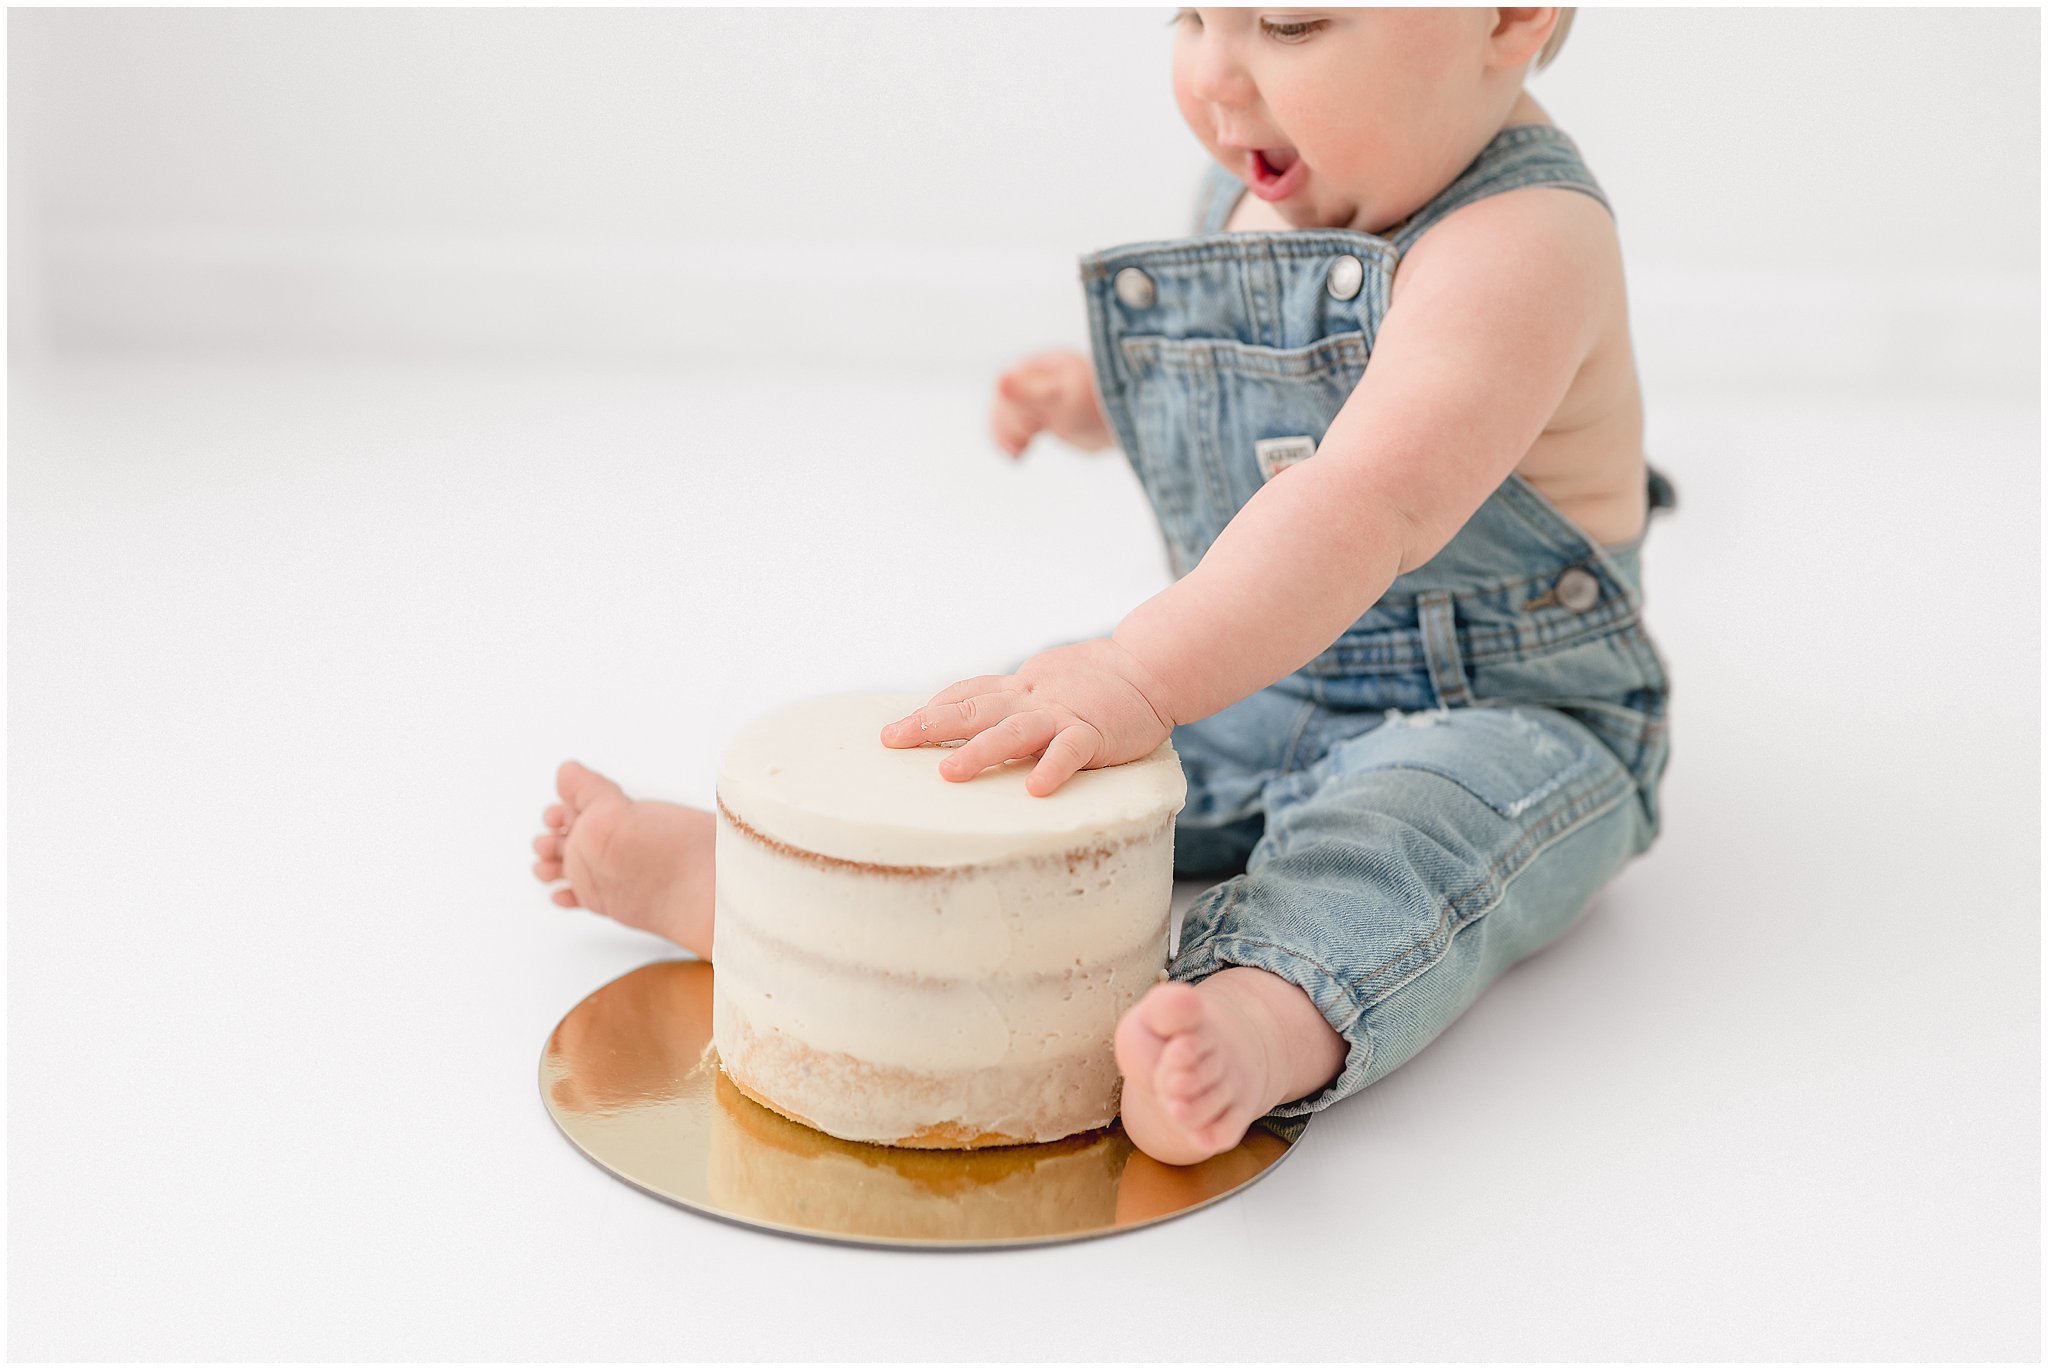 Cake Smash Baby's First Birthday.jpg